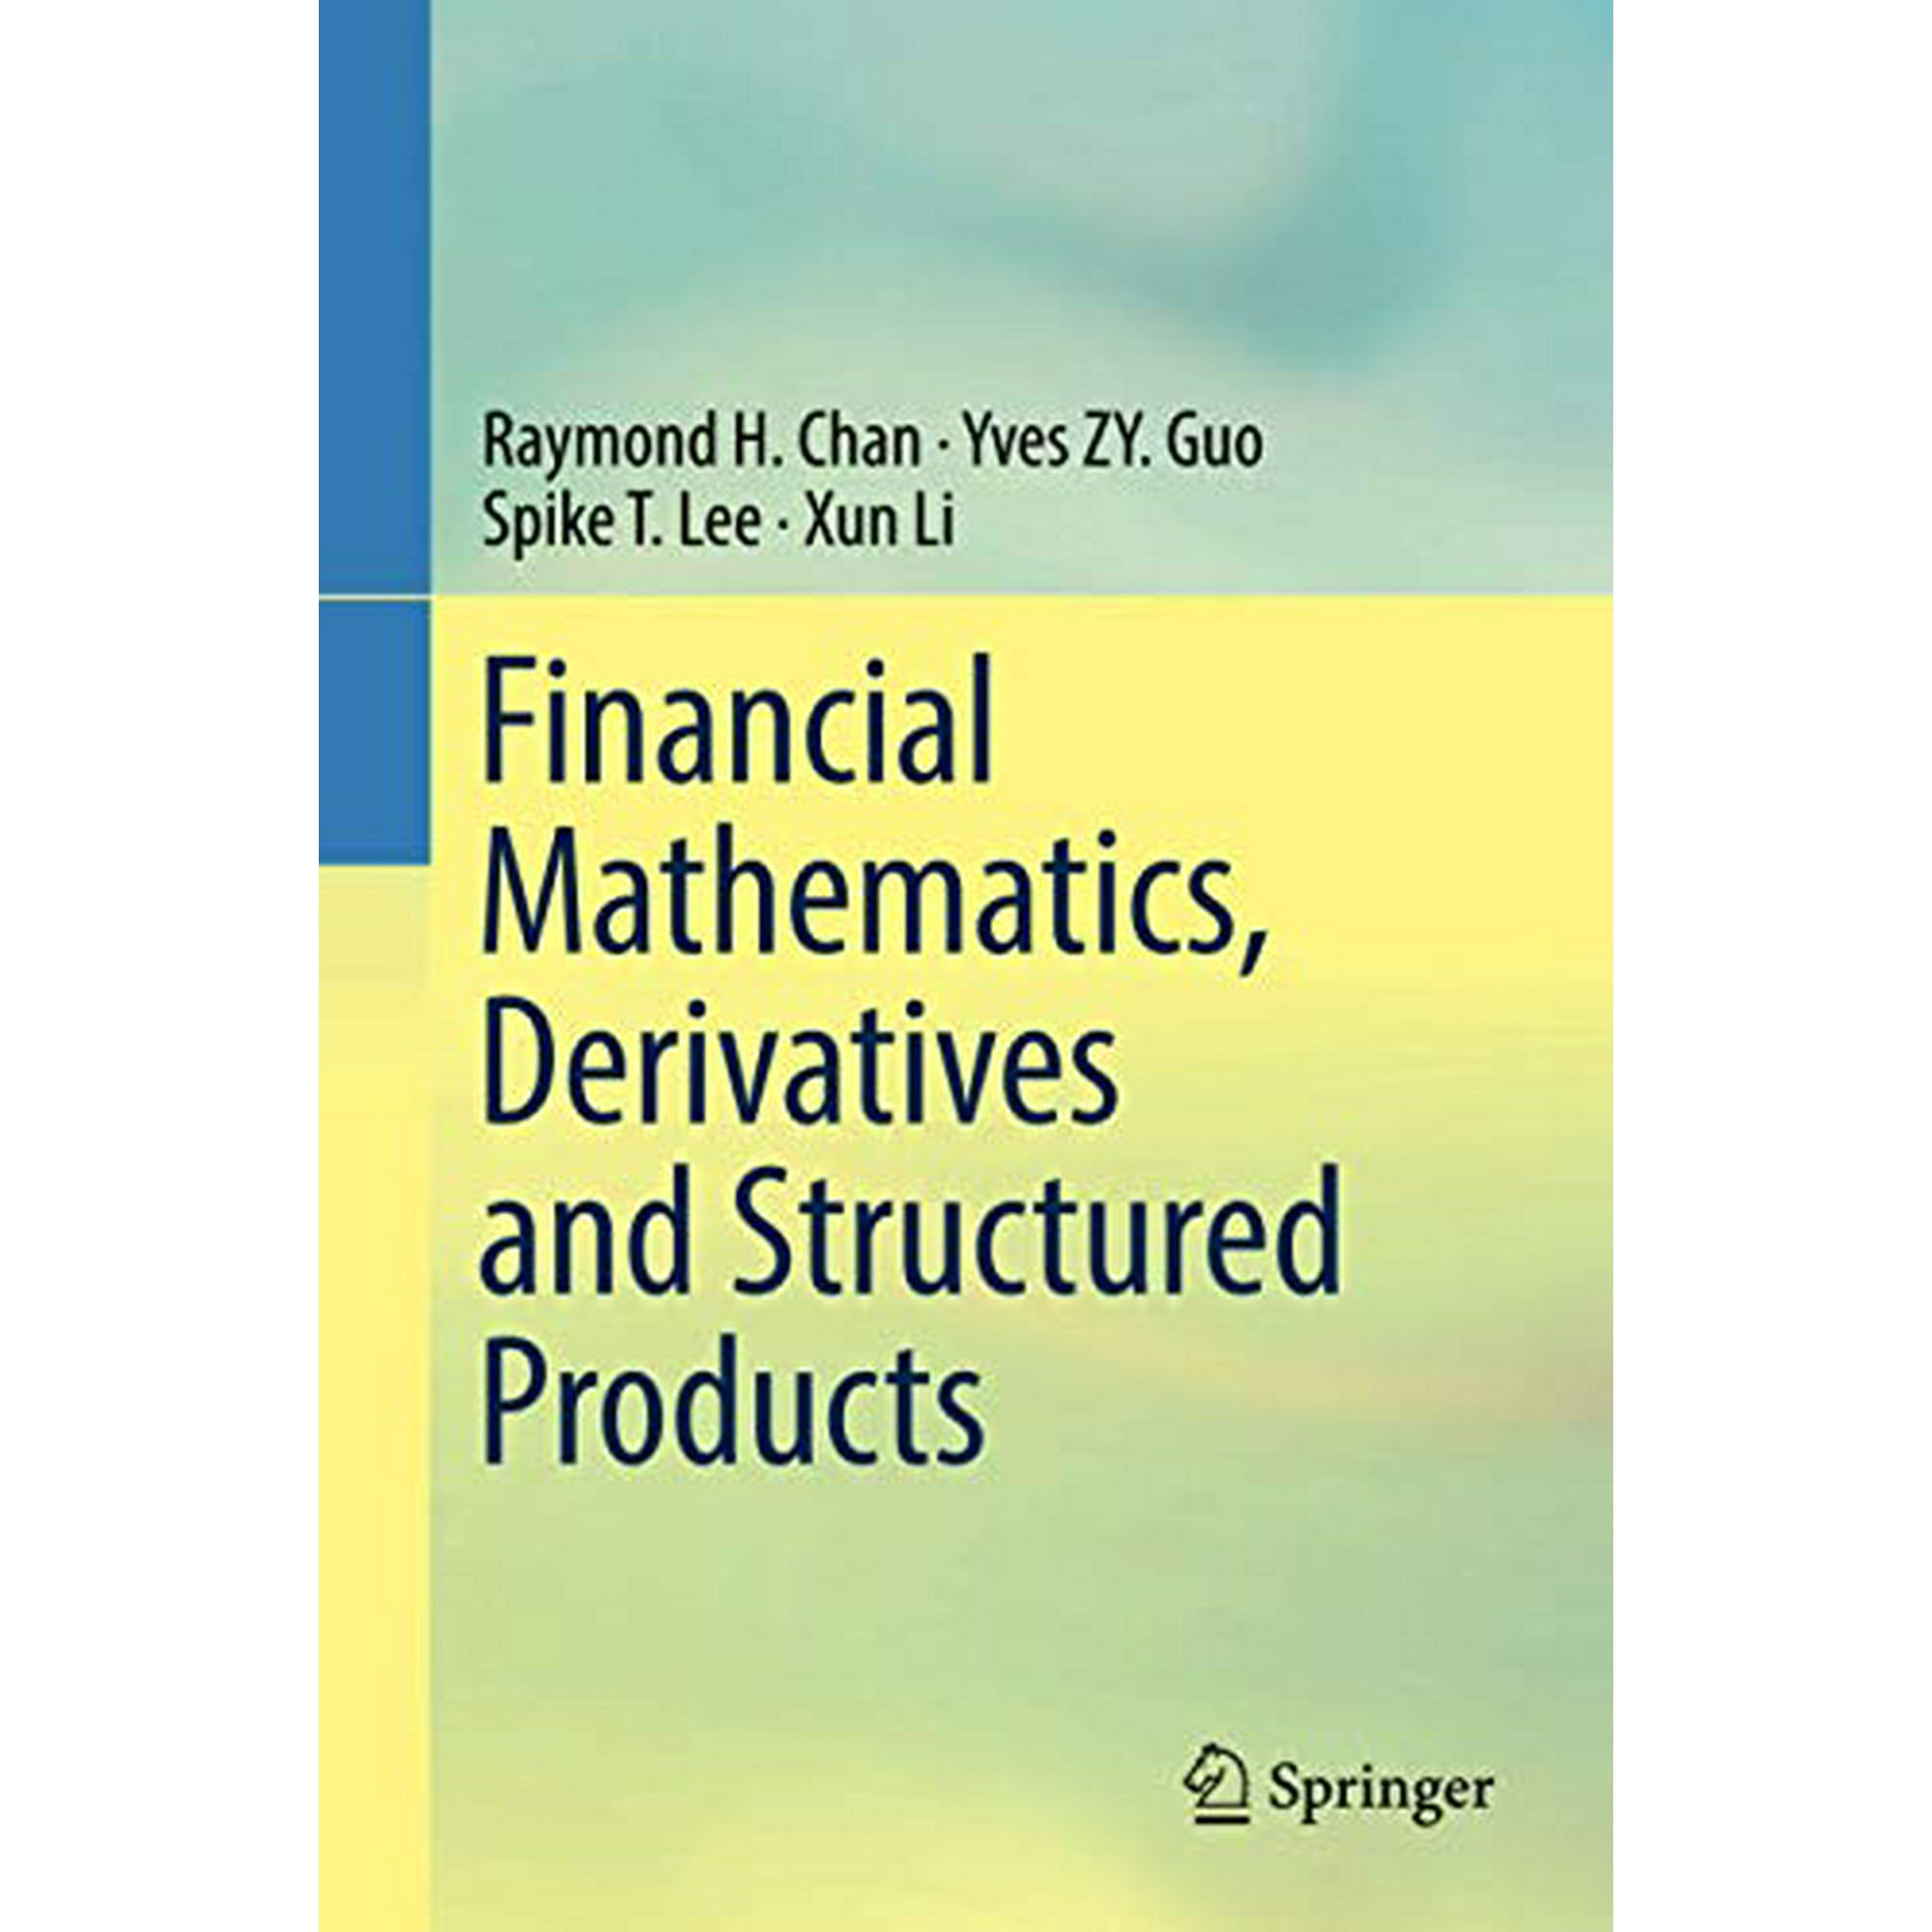 Current topic. Financial Mathematics.